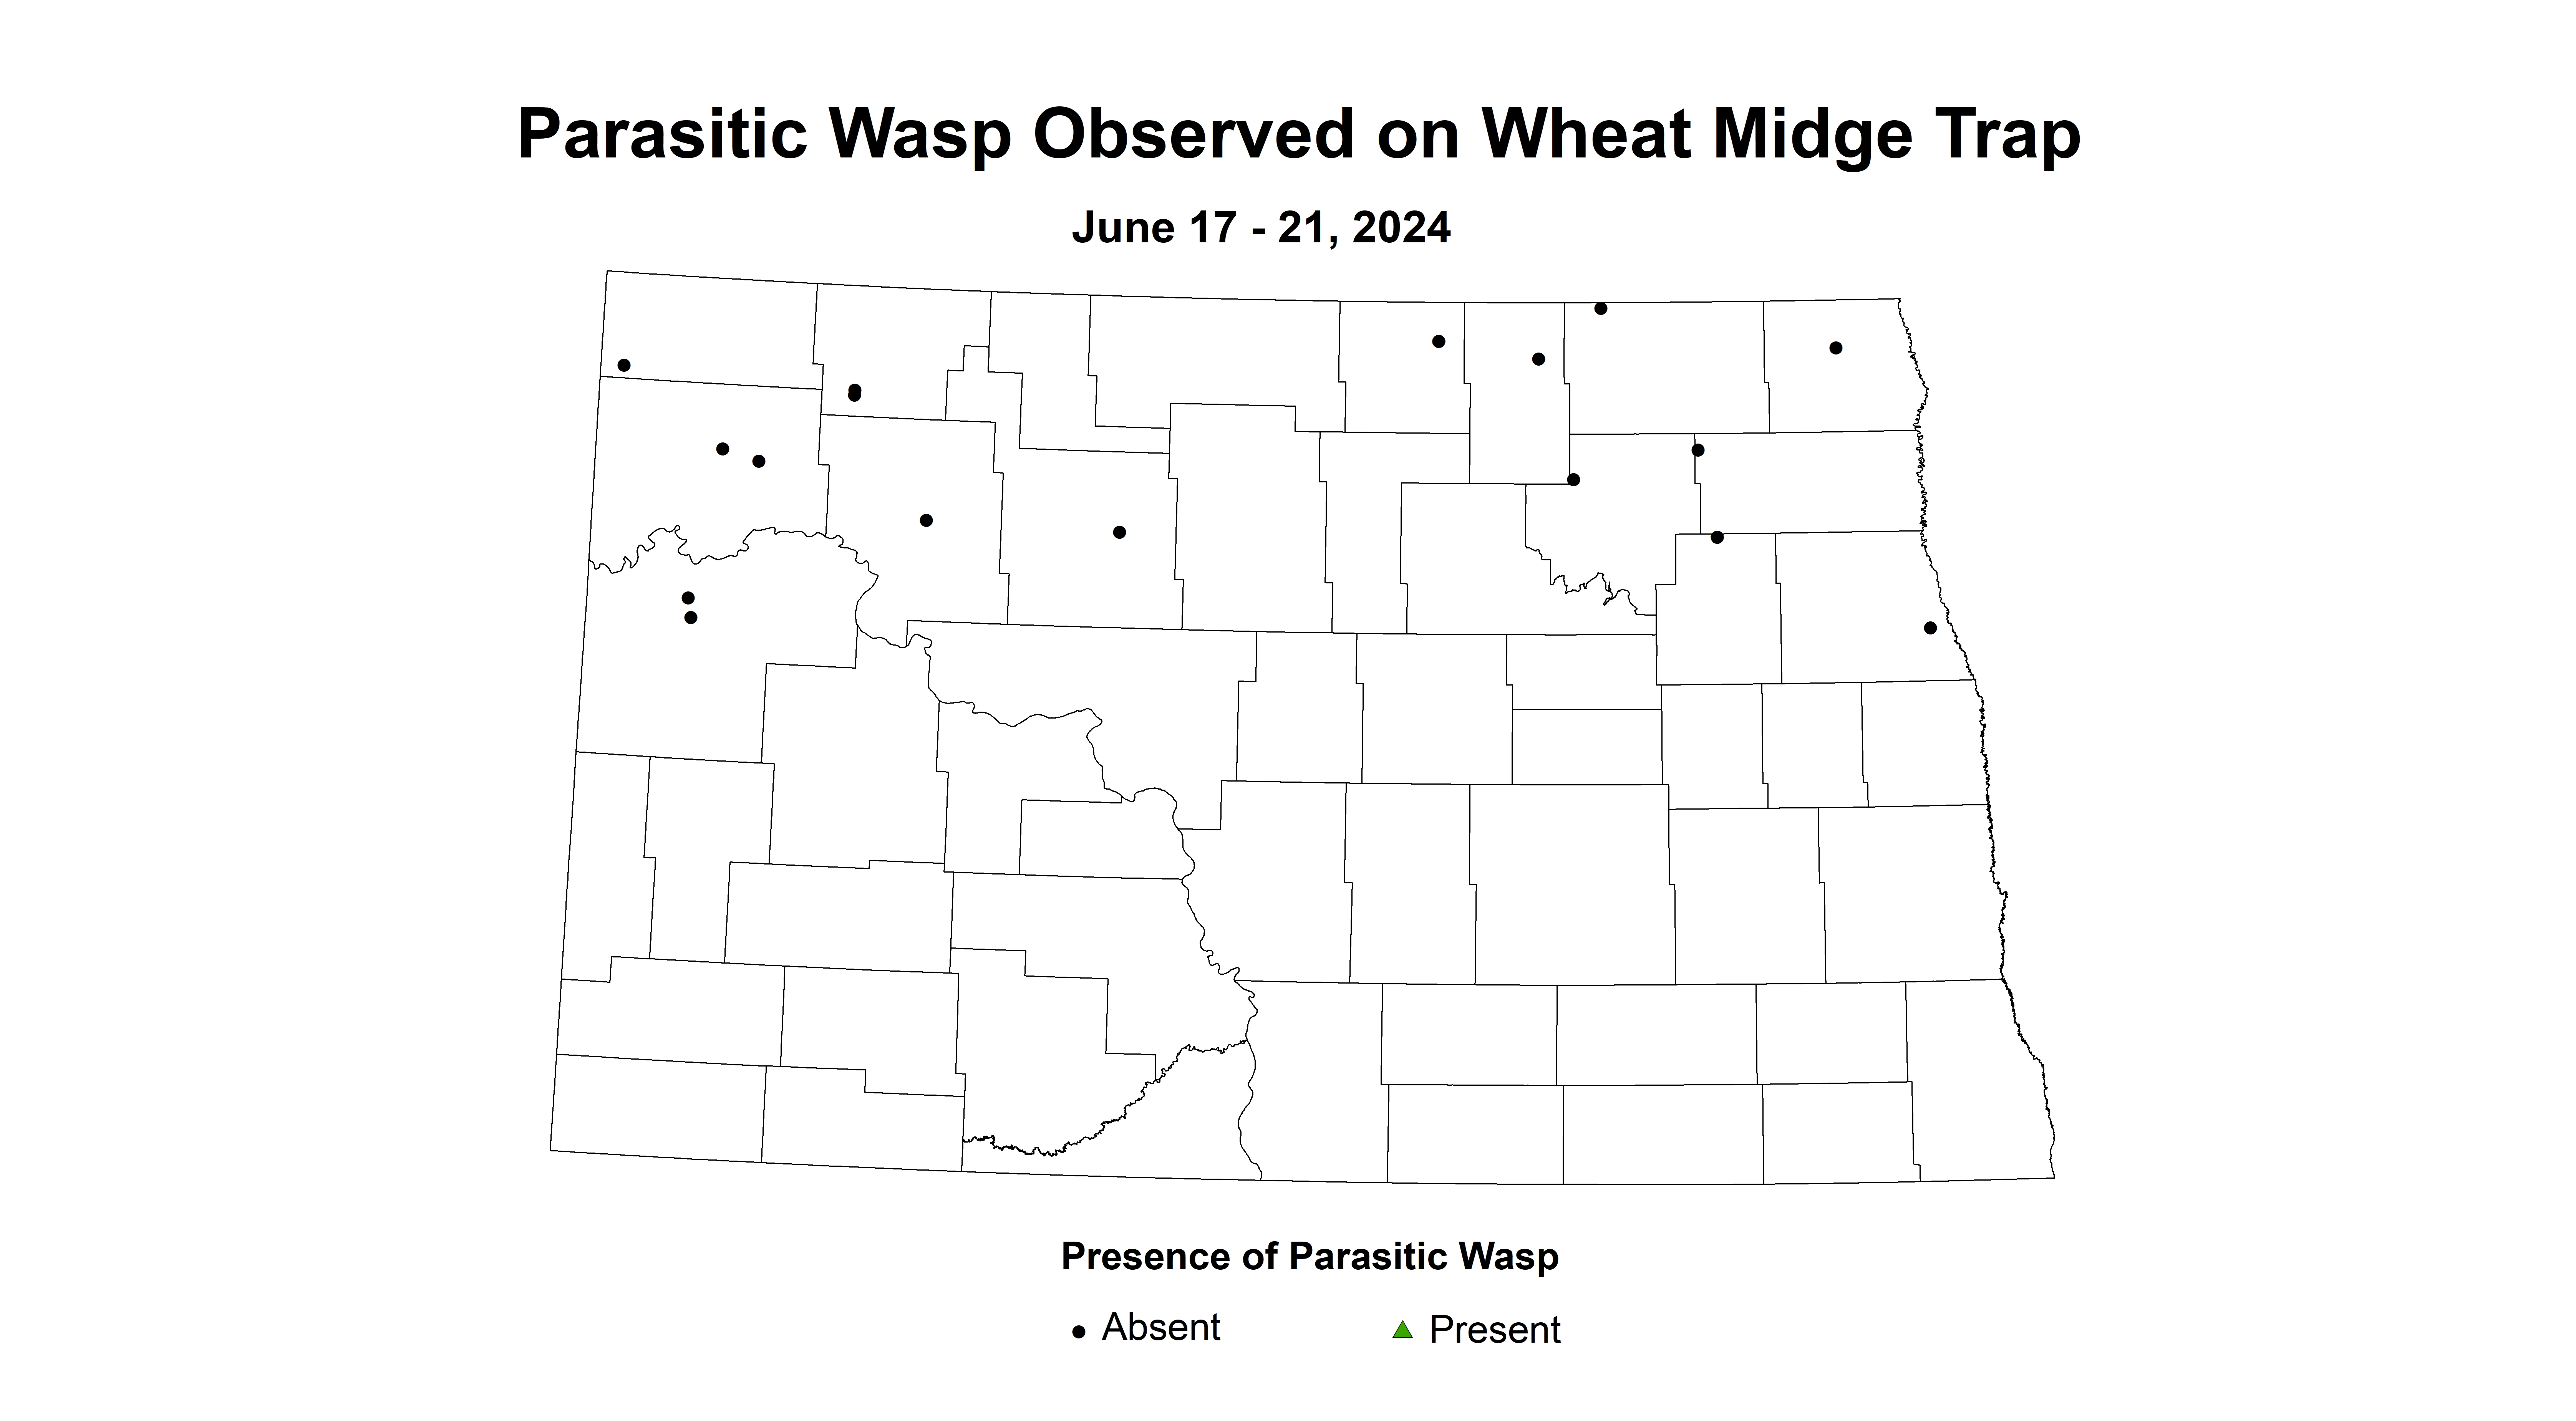 wheat midge trap parasitic wasp June 17-21 2024